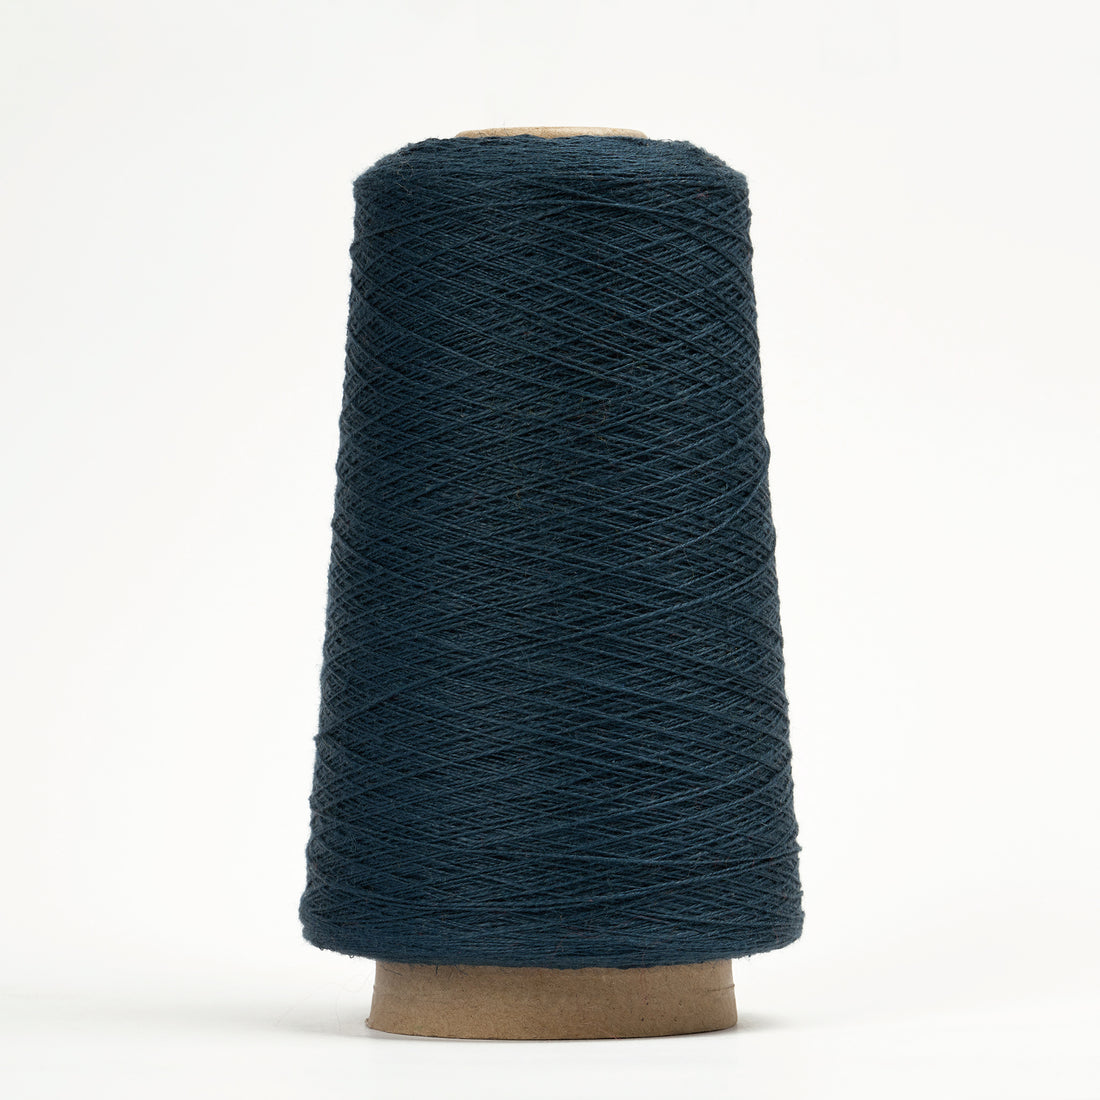 Real Indigo Cotton Yarn - Indigo Blue - Yarn On Cone - Knitting & Weaving